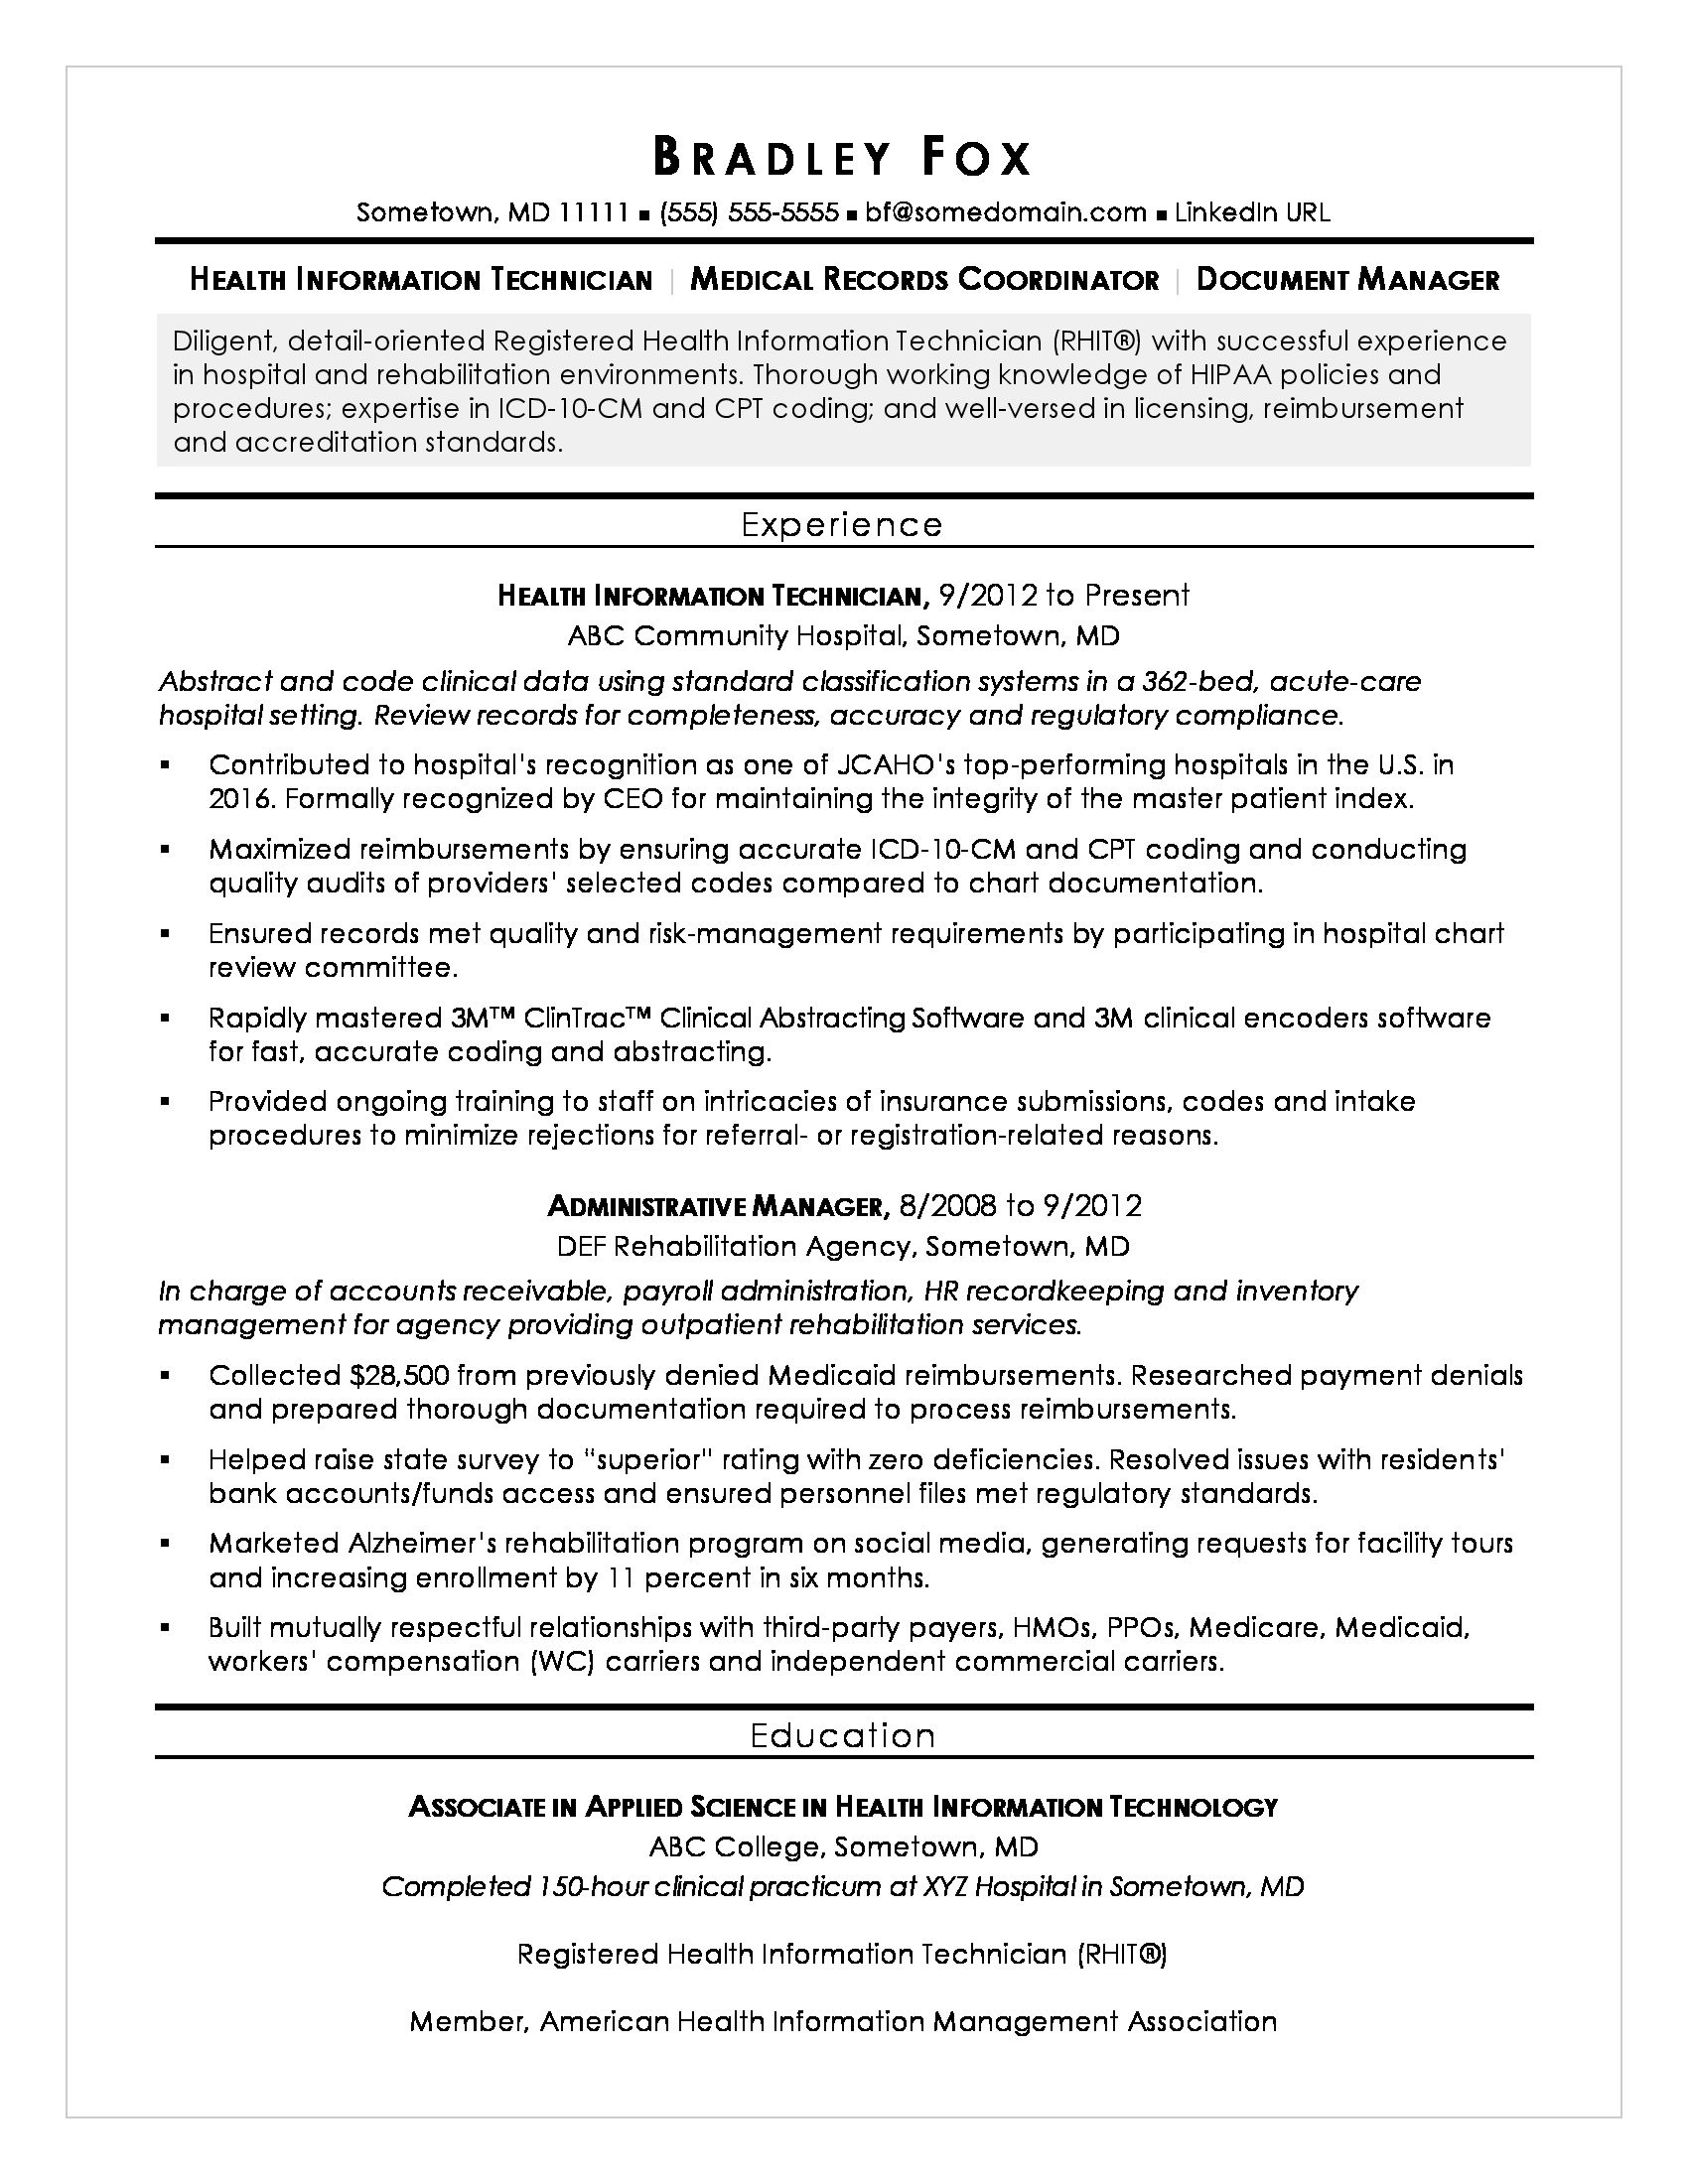 Sample Resume for Healthcare Risk Managers Health Information Technician Sample Resume Monster.com